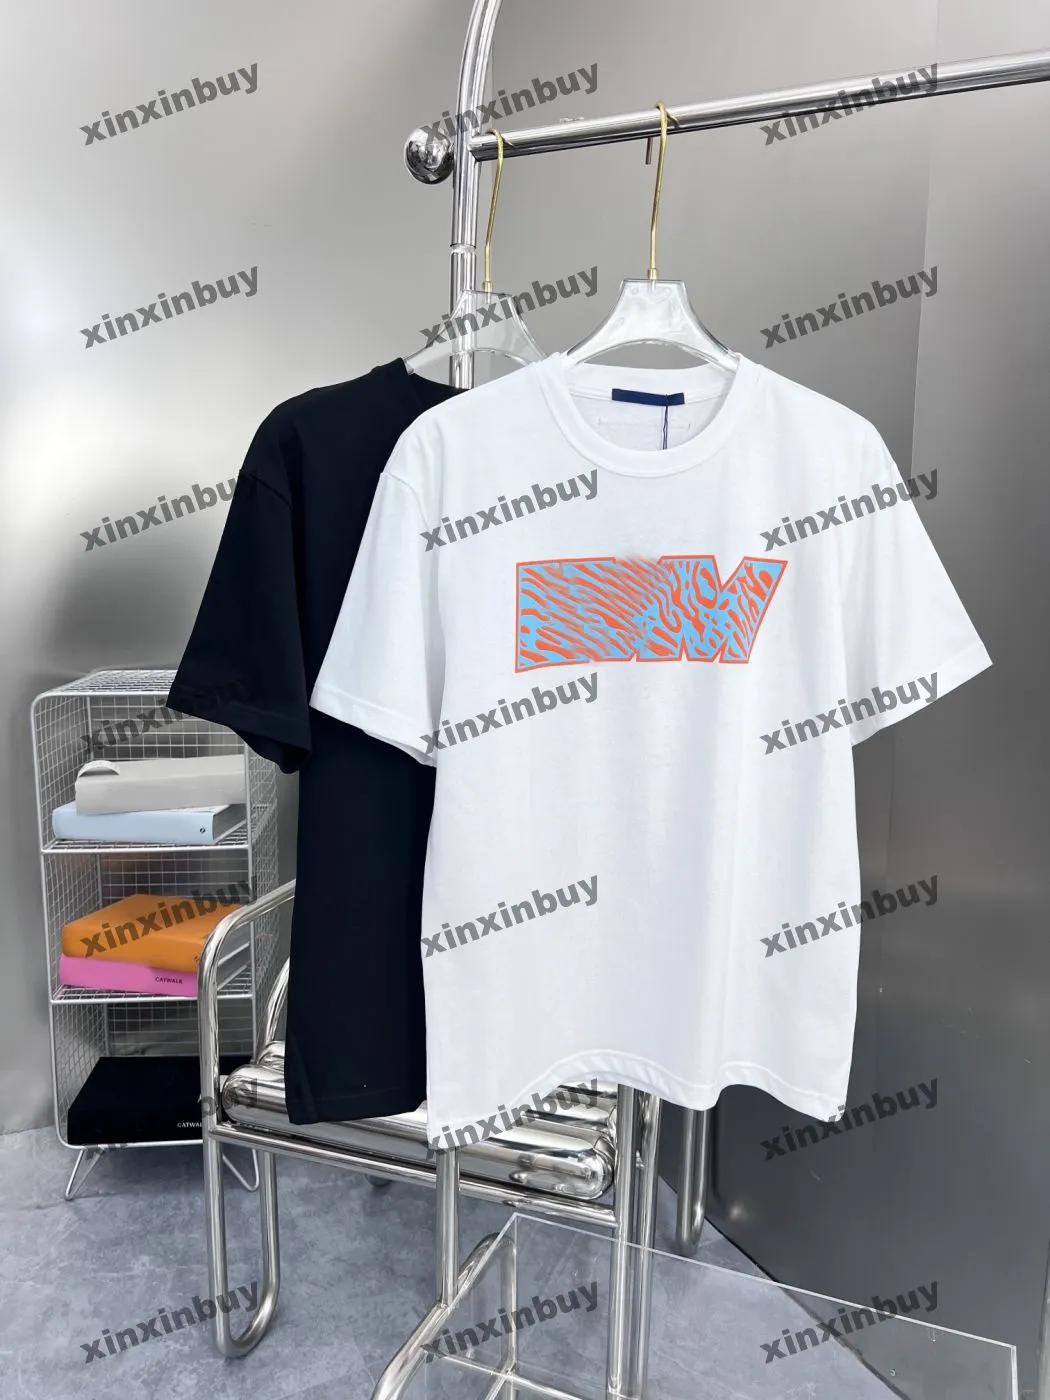 xinxinbuy Men designer Tee t shirt 23ss Pocket letters print short sleeve cotton women black white blue S-3XL